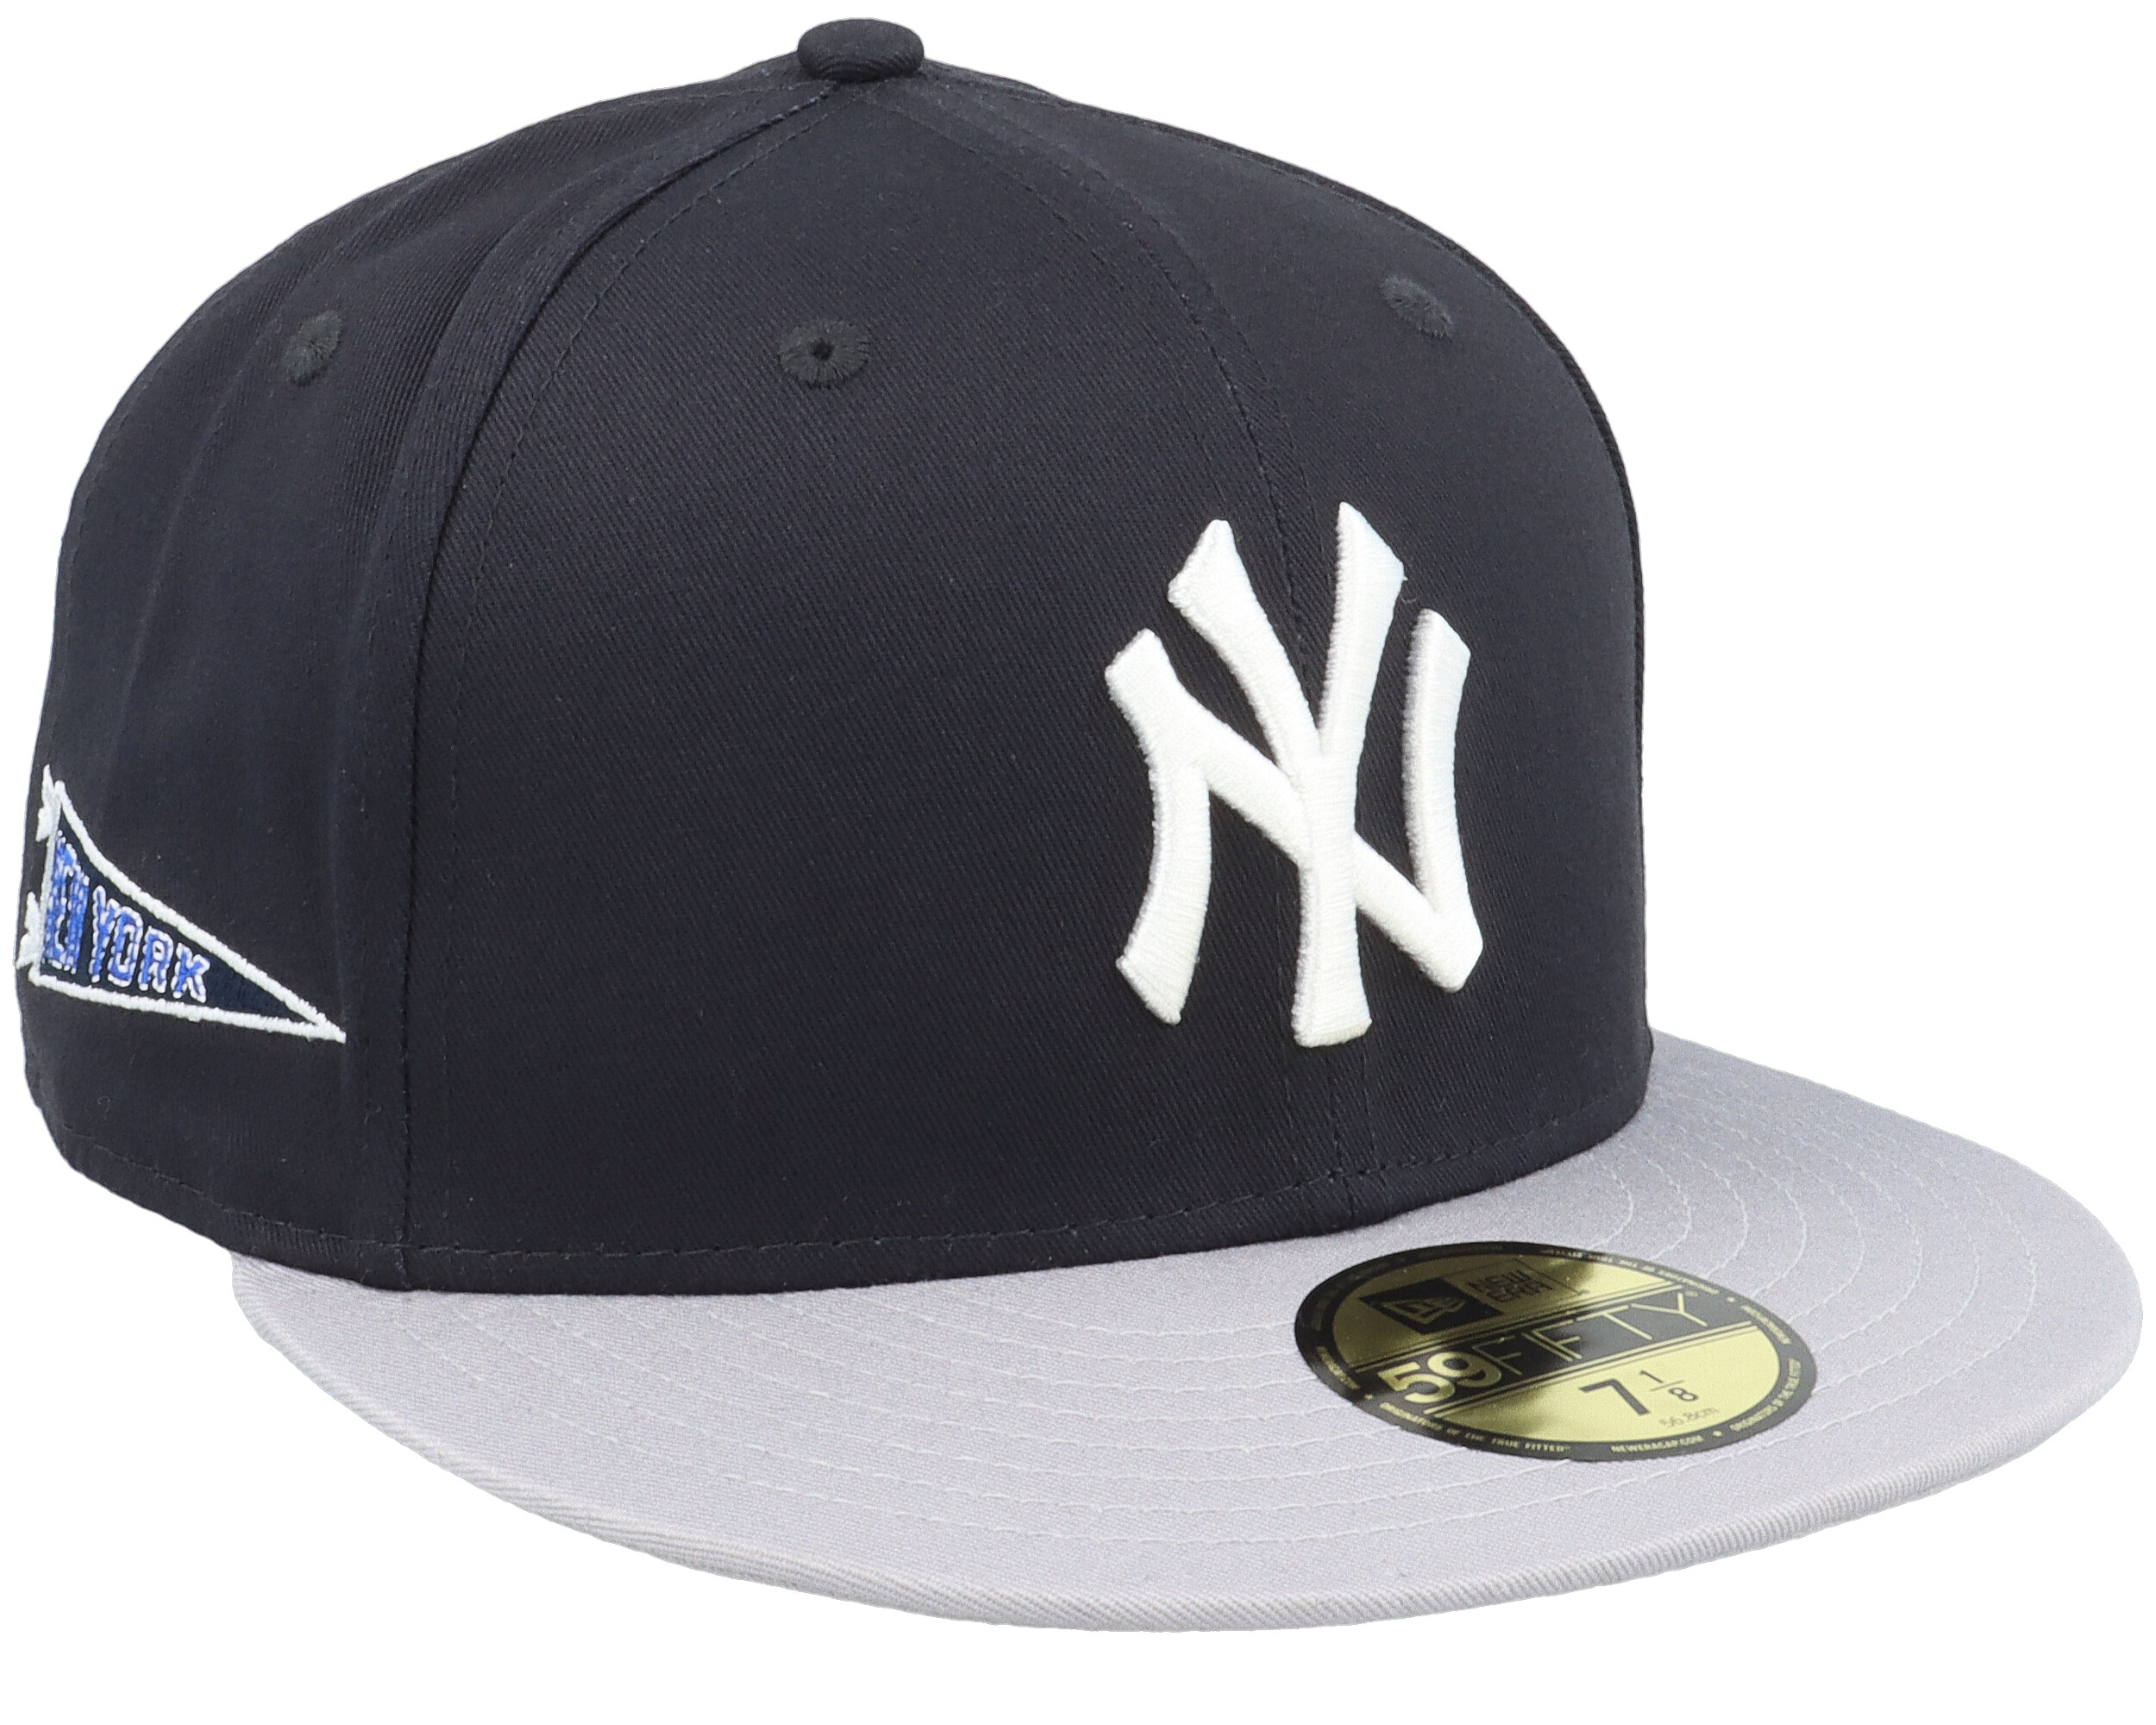 MLB Men's New York Yankees '47 Brand Home Clean Up Cap, Navy Blue, One ...